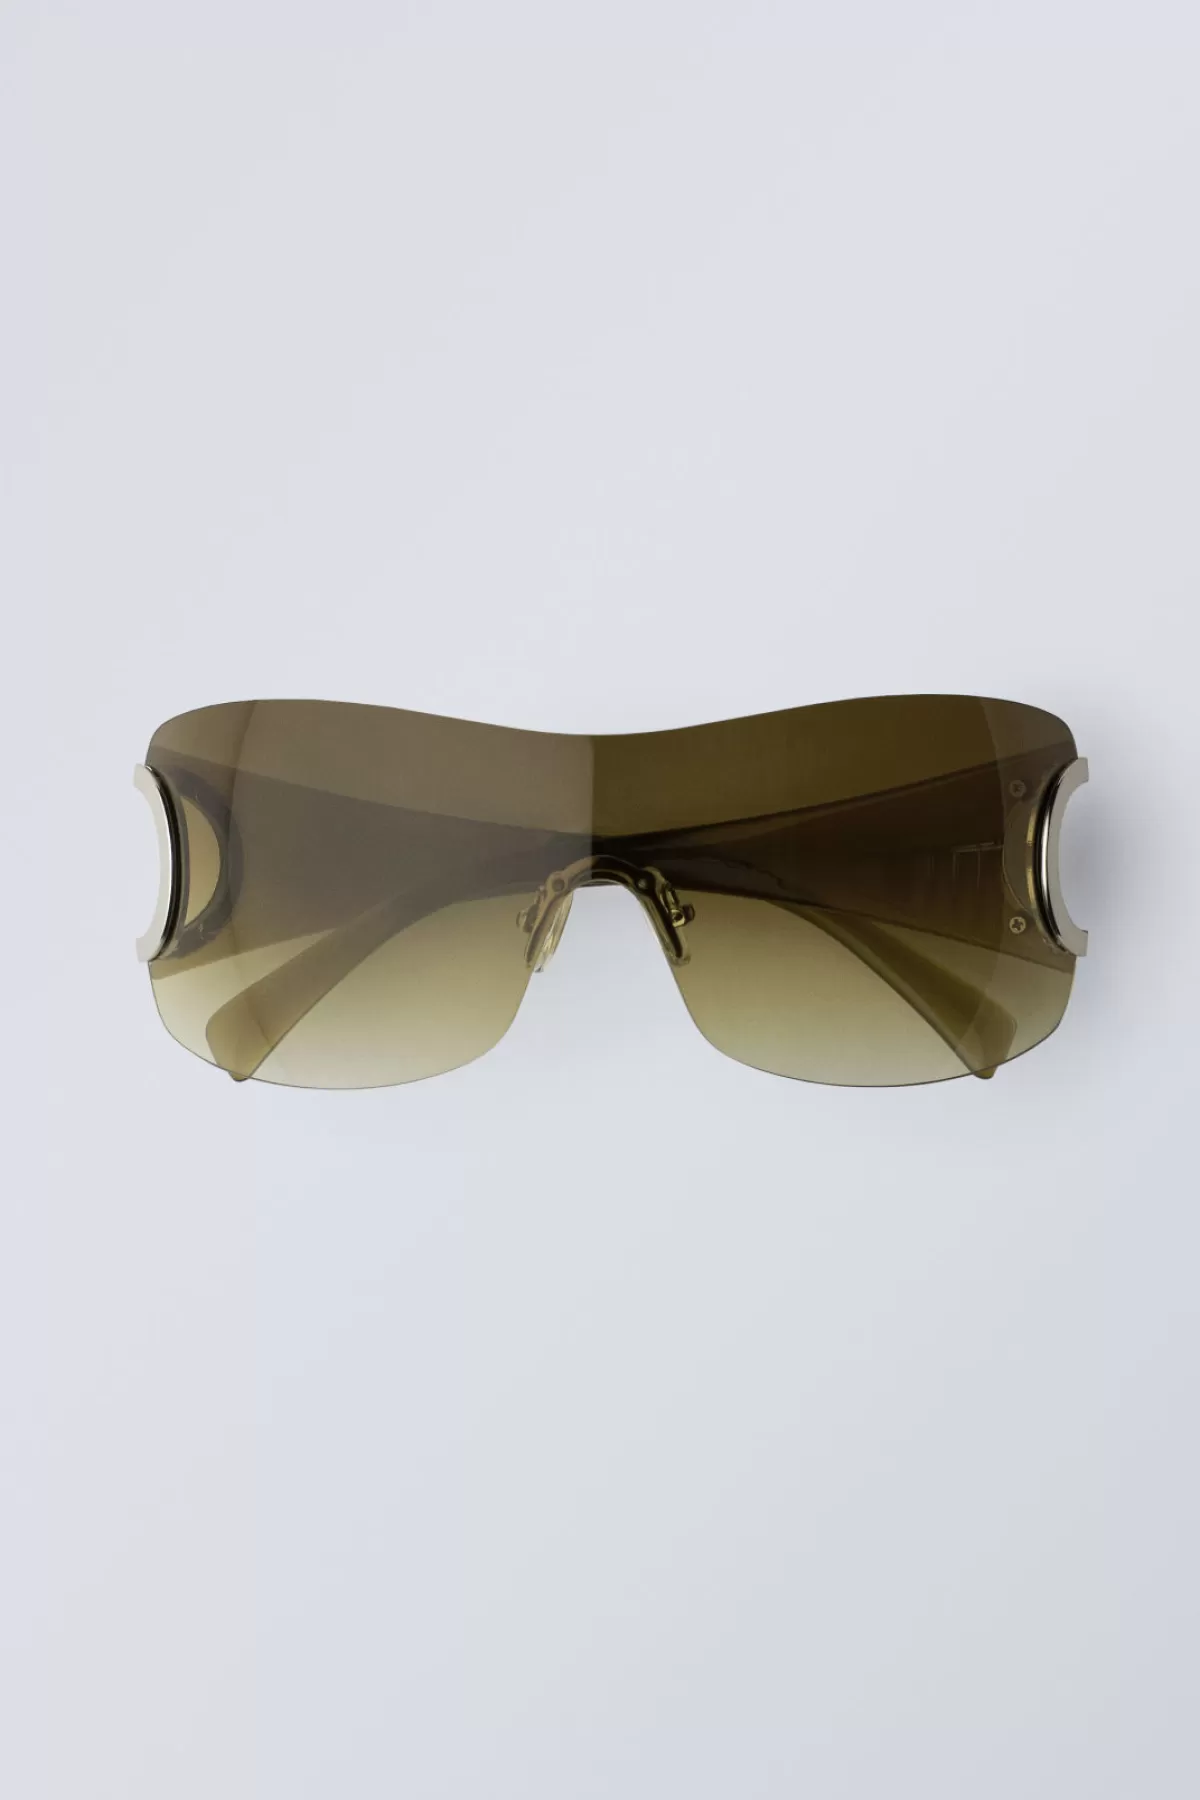 Weekday Motion Sunglasses Khaki Outlet